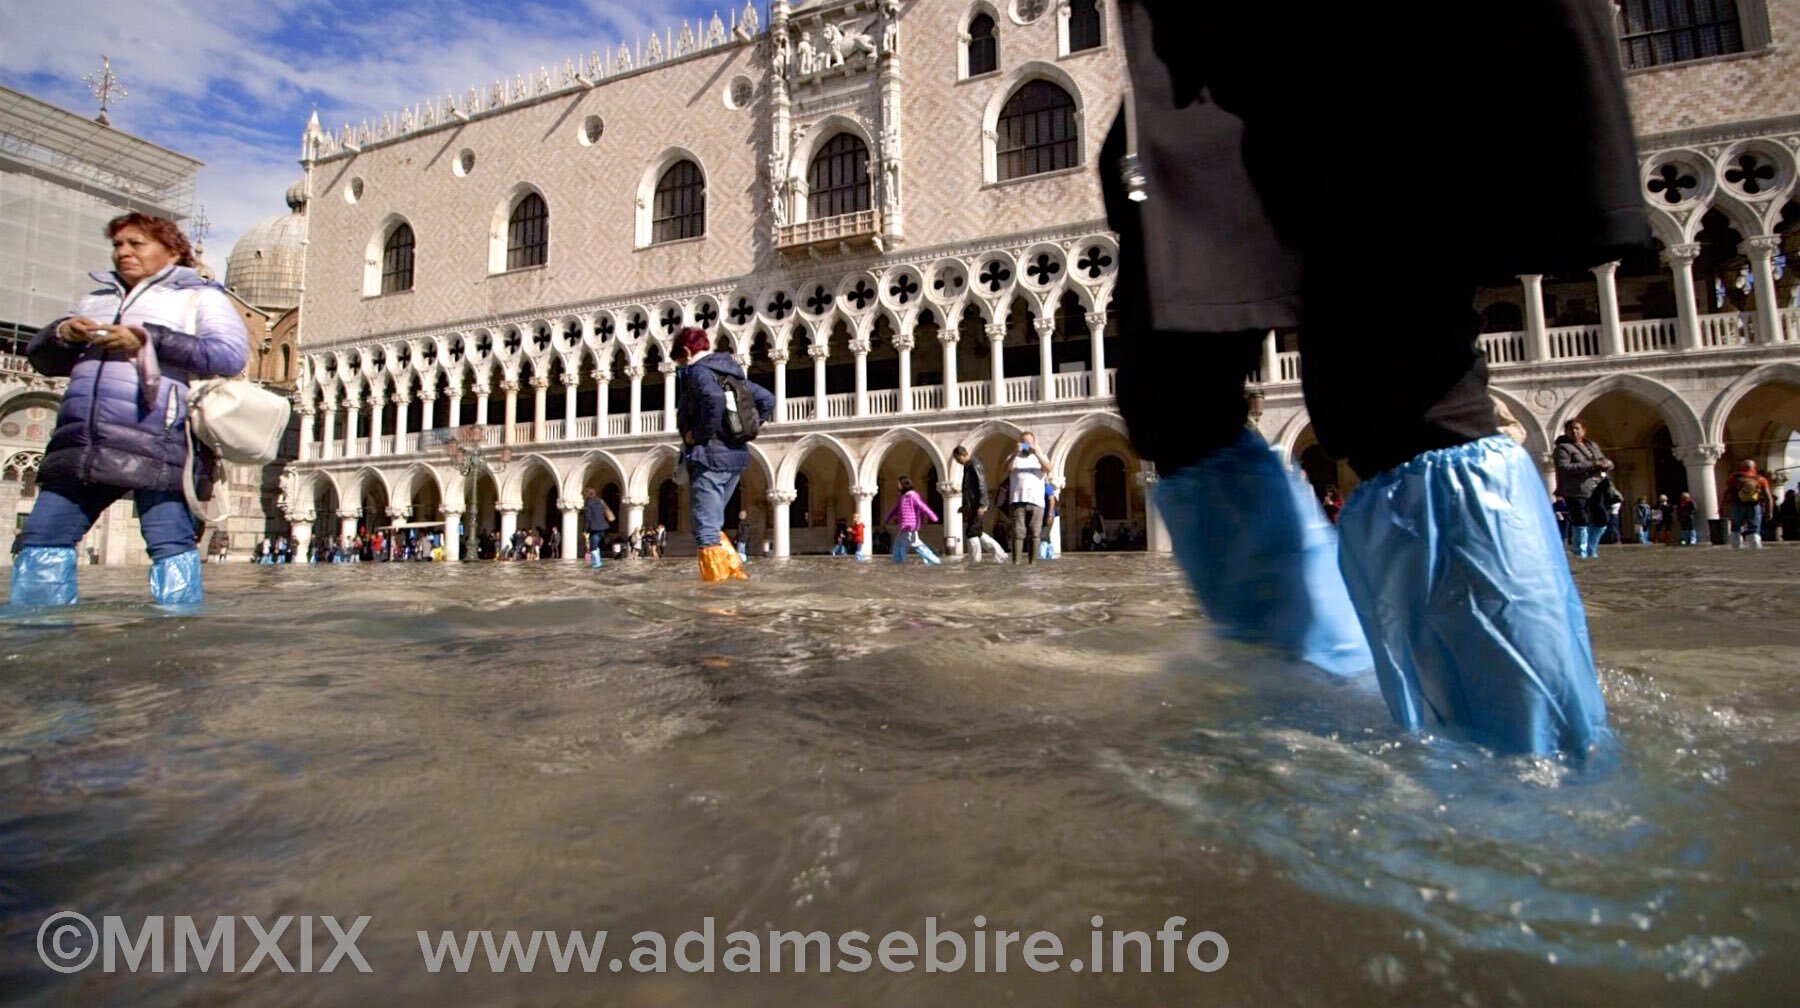 Venice acqua alta flooding - feet.jpg